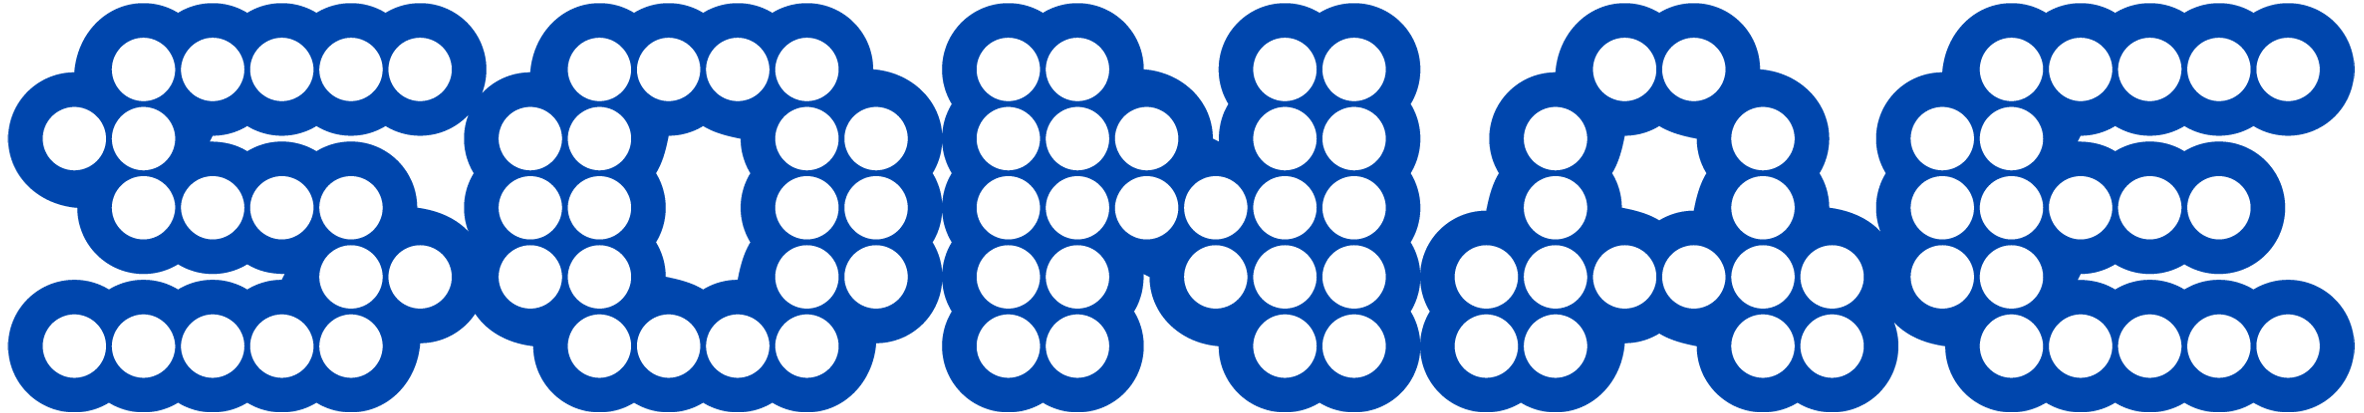 Sonae Brand Logo